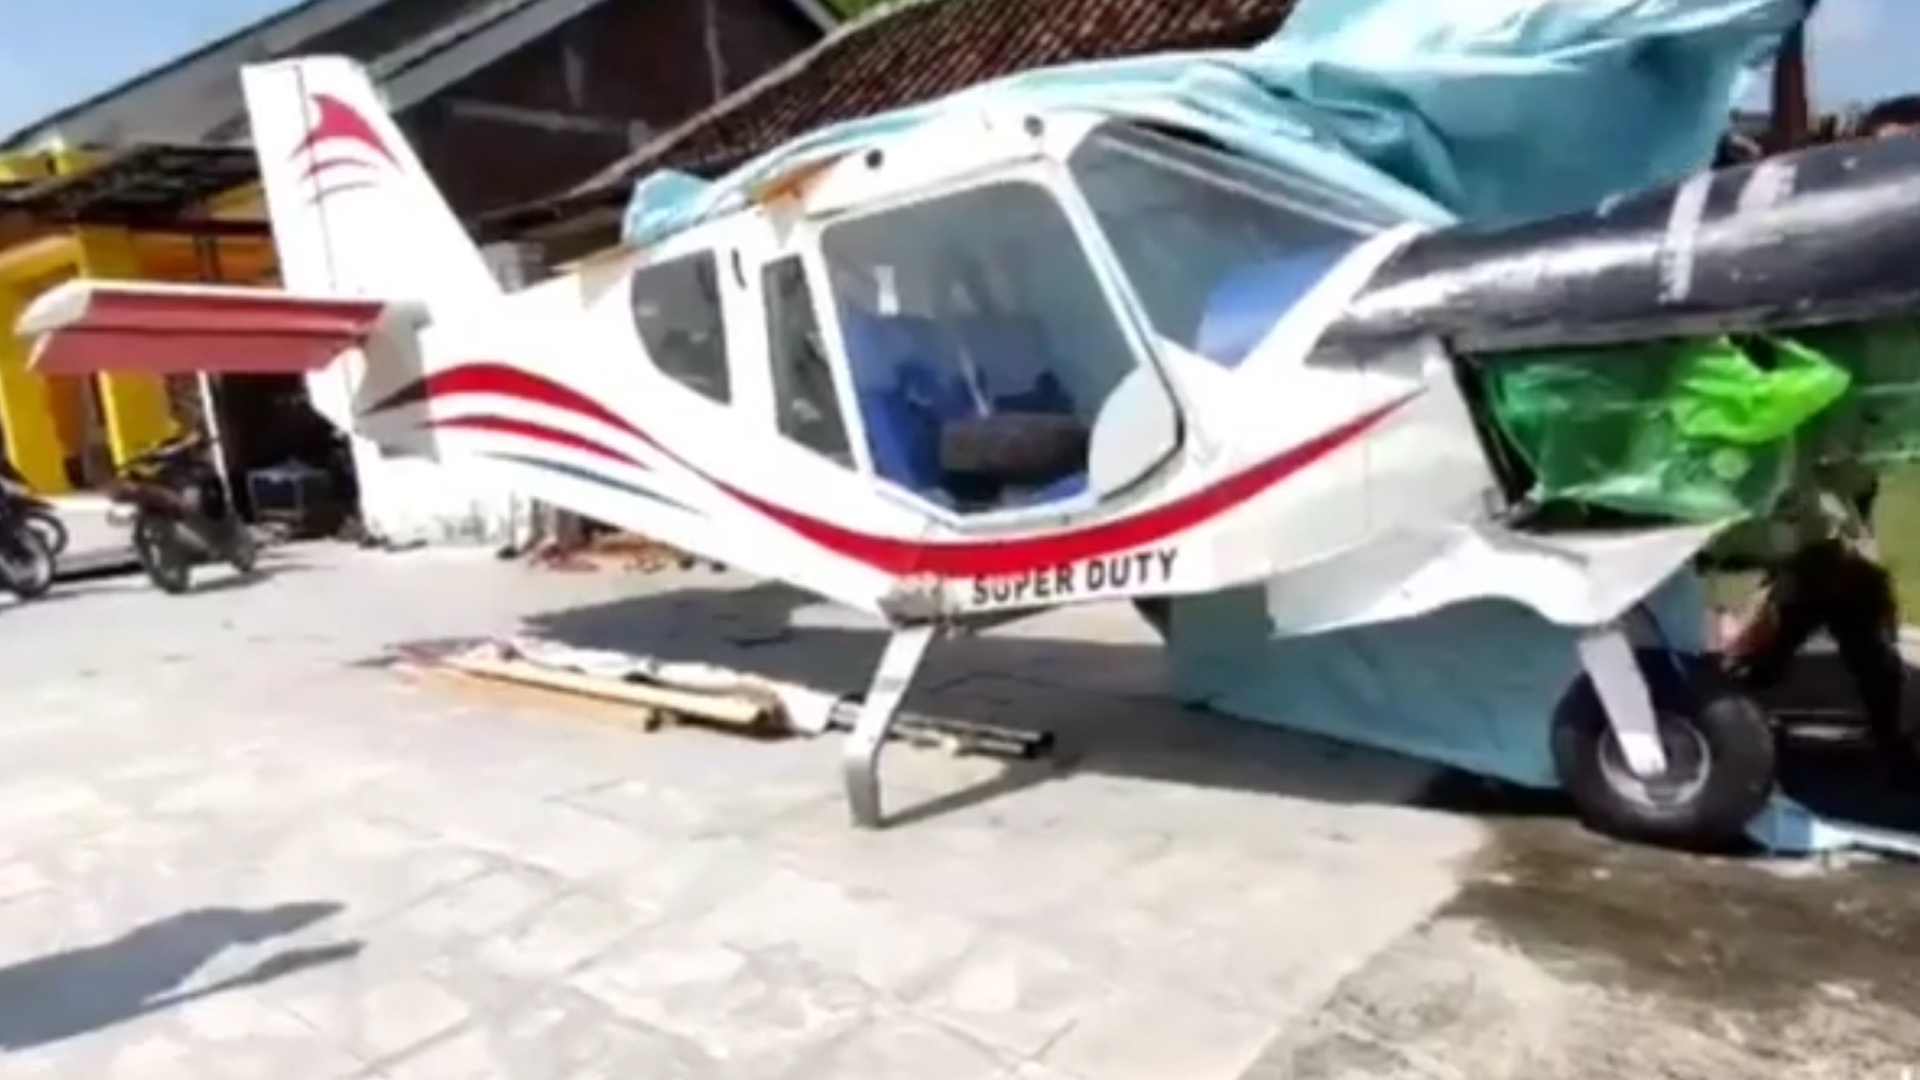 Hanya Lulusan STM, Pria Dusun Ini Mampu Rakit Pesawat, 2 Unit Telah Dijual ke Pemerintah Ceko